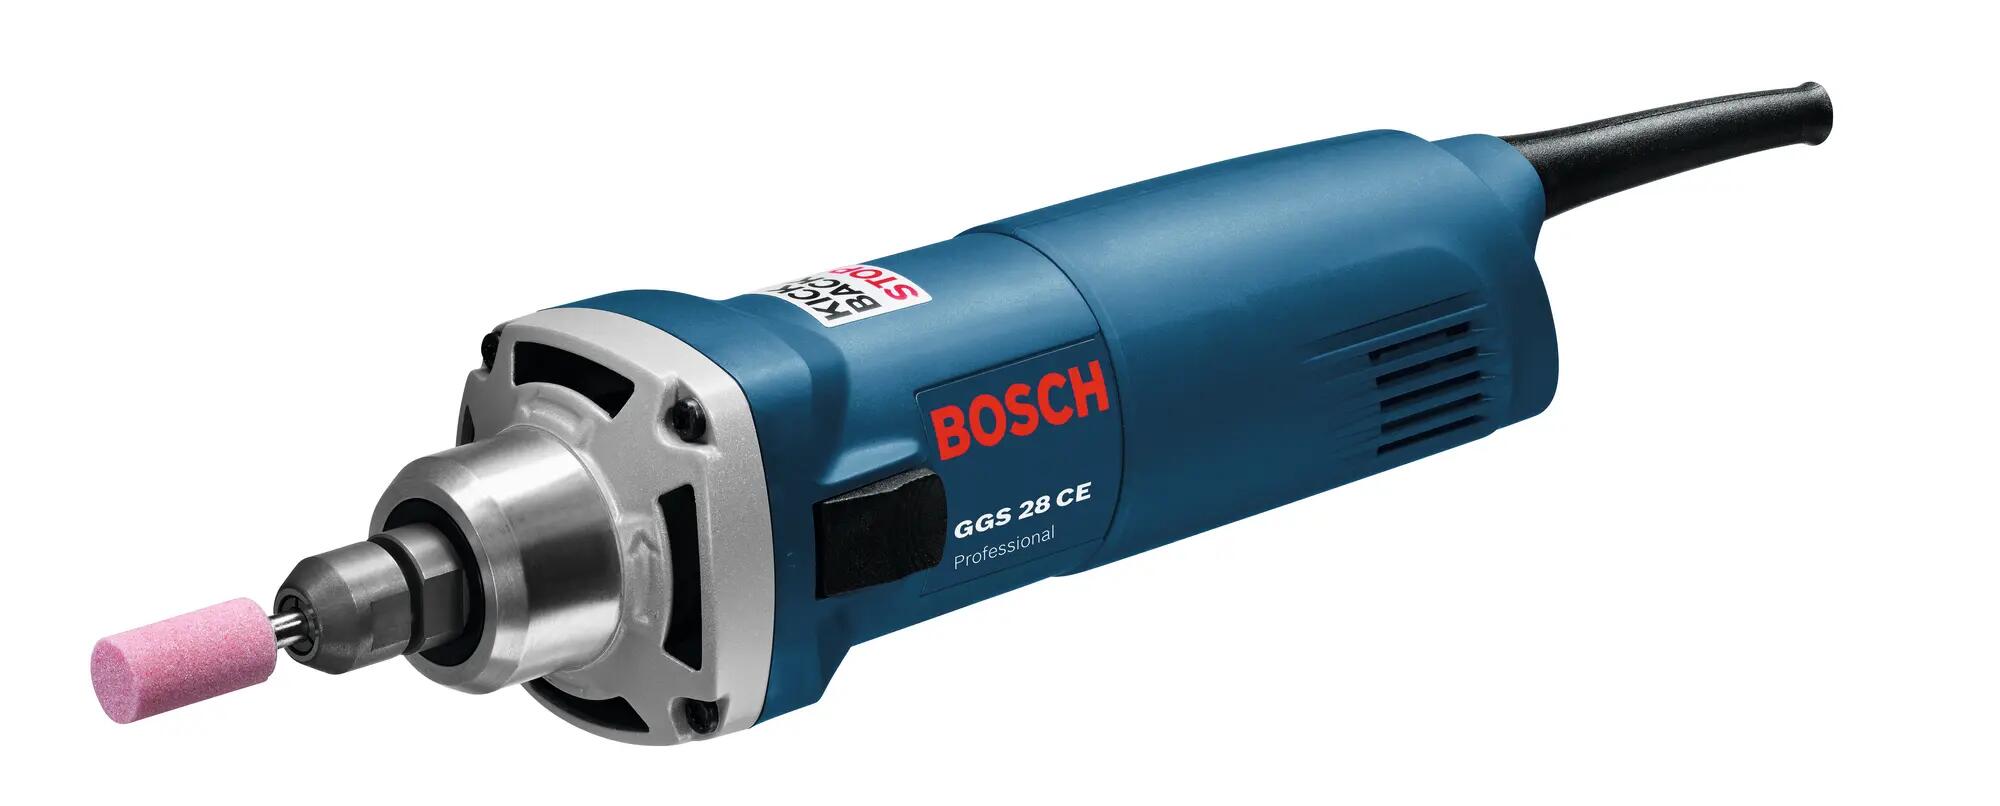 Bosch blue amoladora recta ggs 28 ce 10.000 – 30.000 r. p. m.